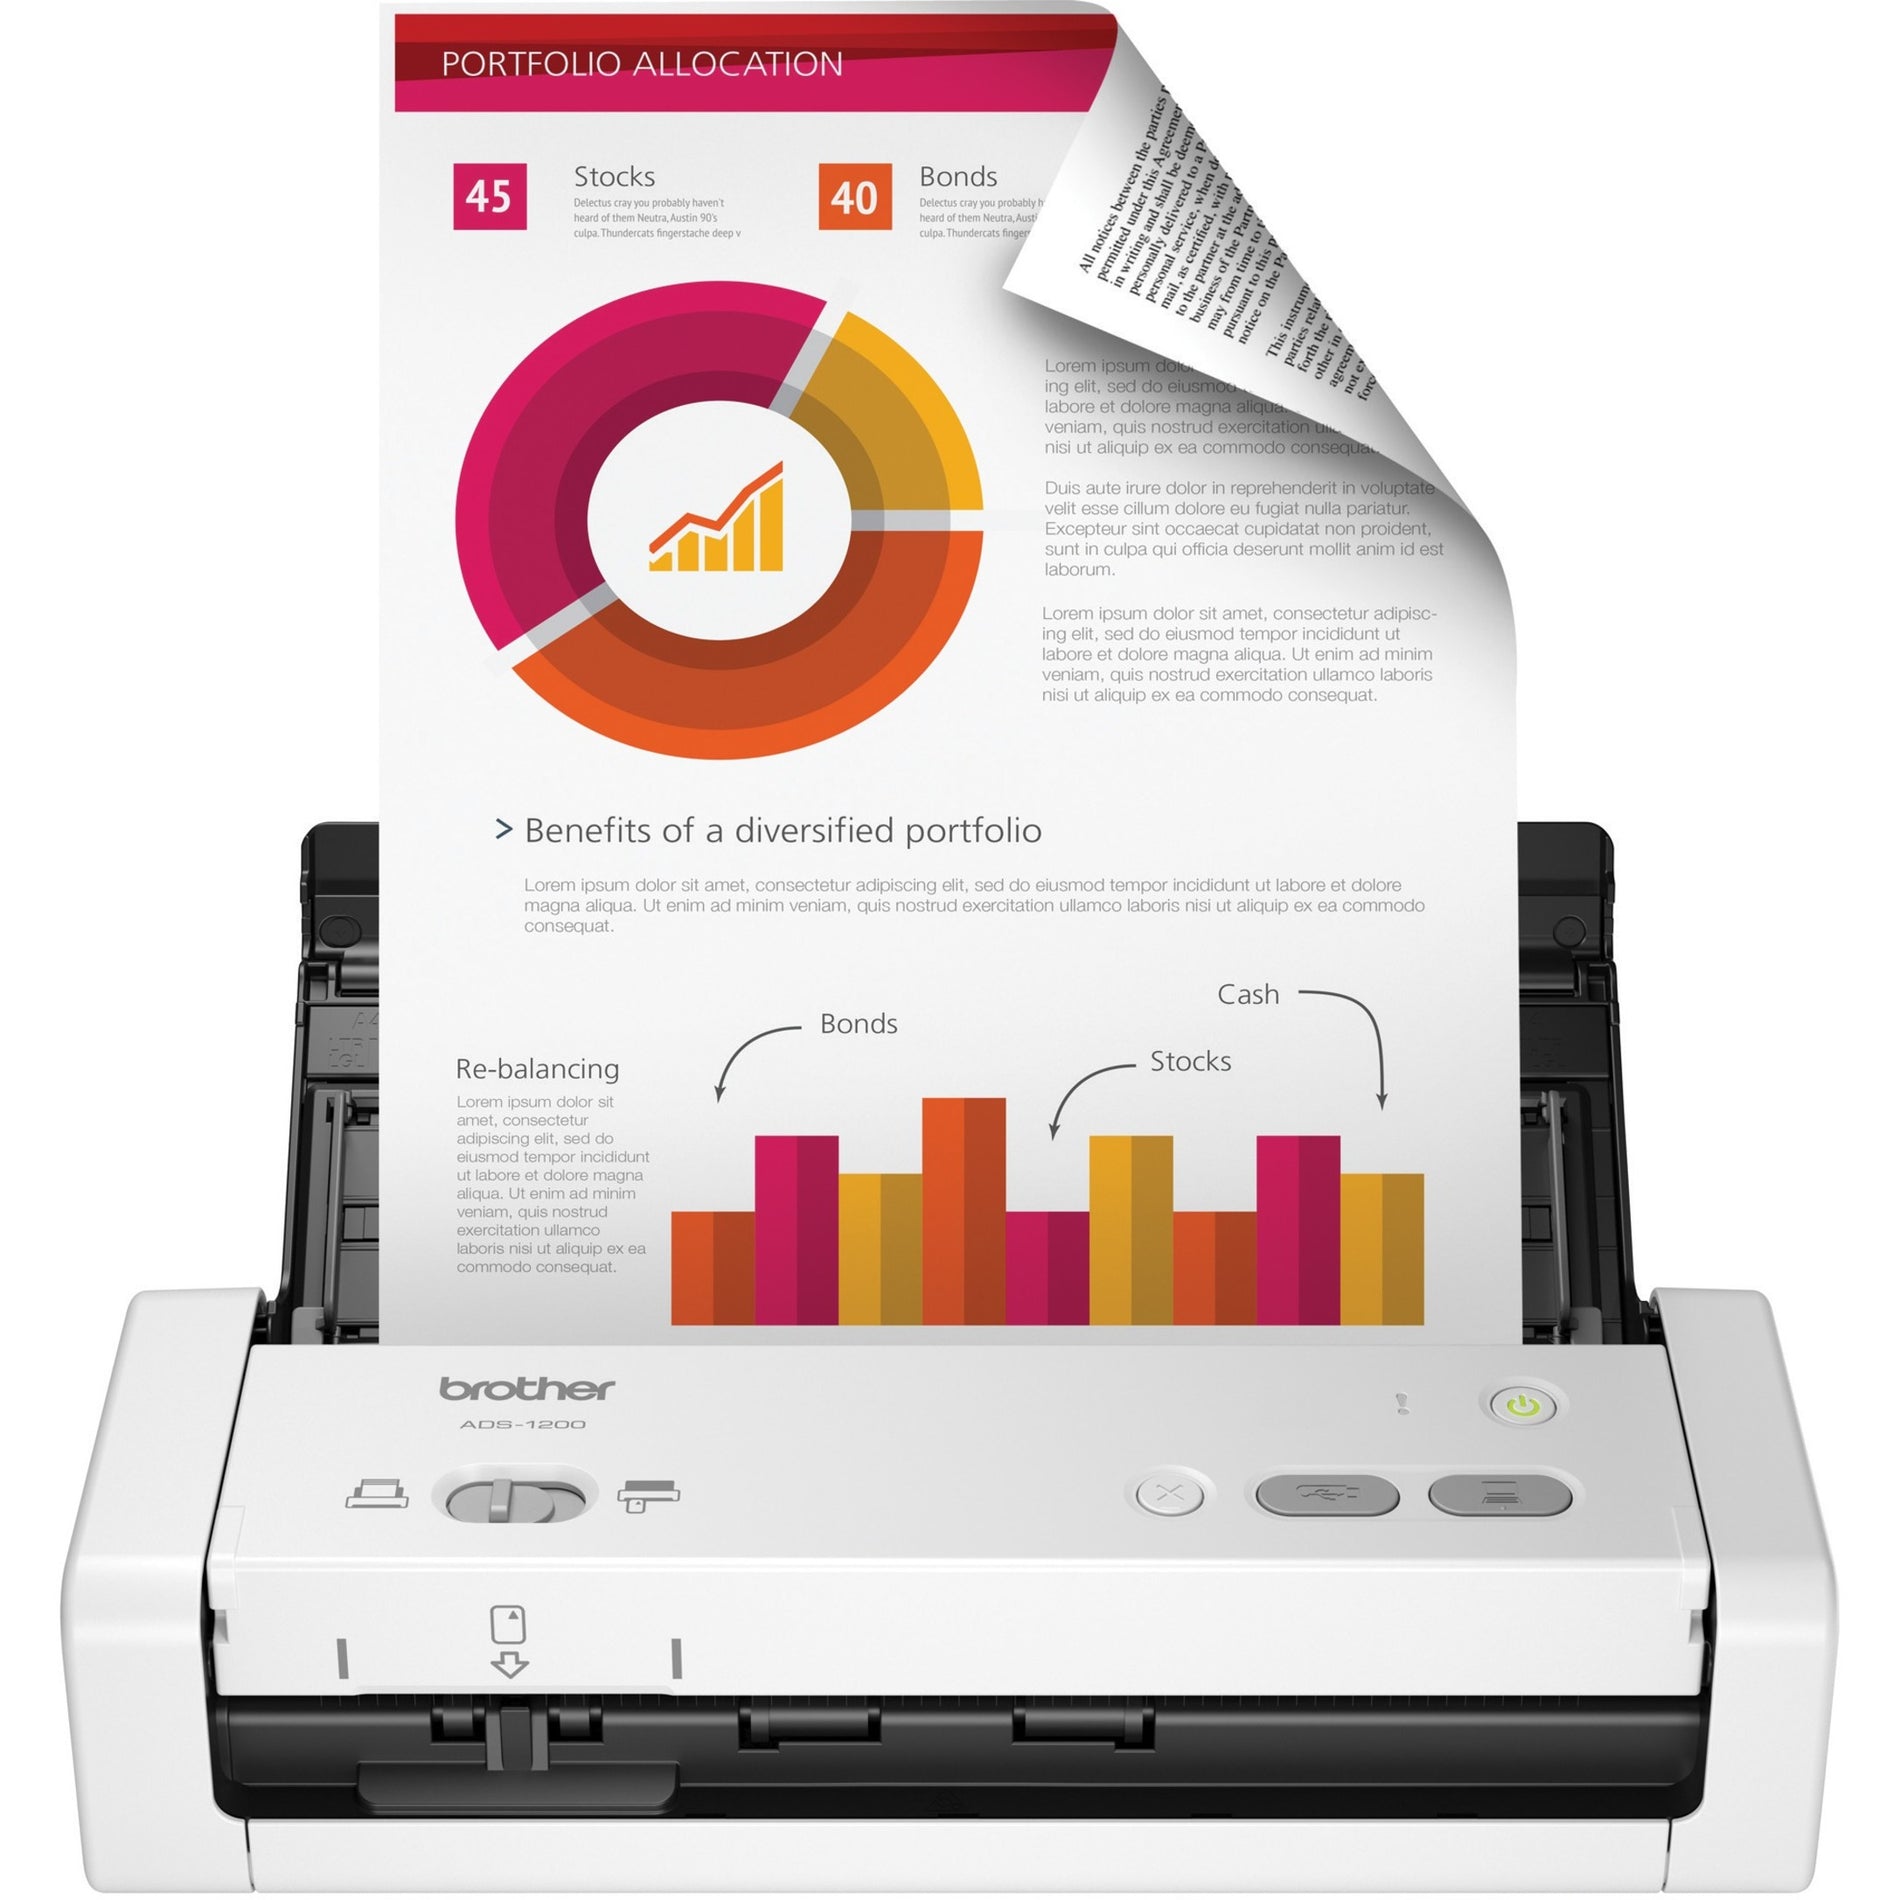 Brother ADS-1200 Compact Desktop Scanner, Color Duplex Scanning, 600 dpi Optical Resolution, 25 ppm/50 ipm Scan Speed